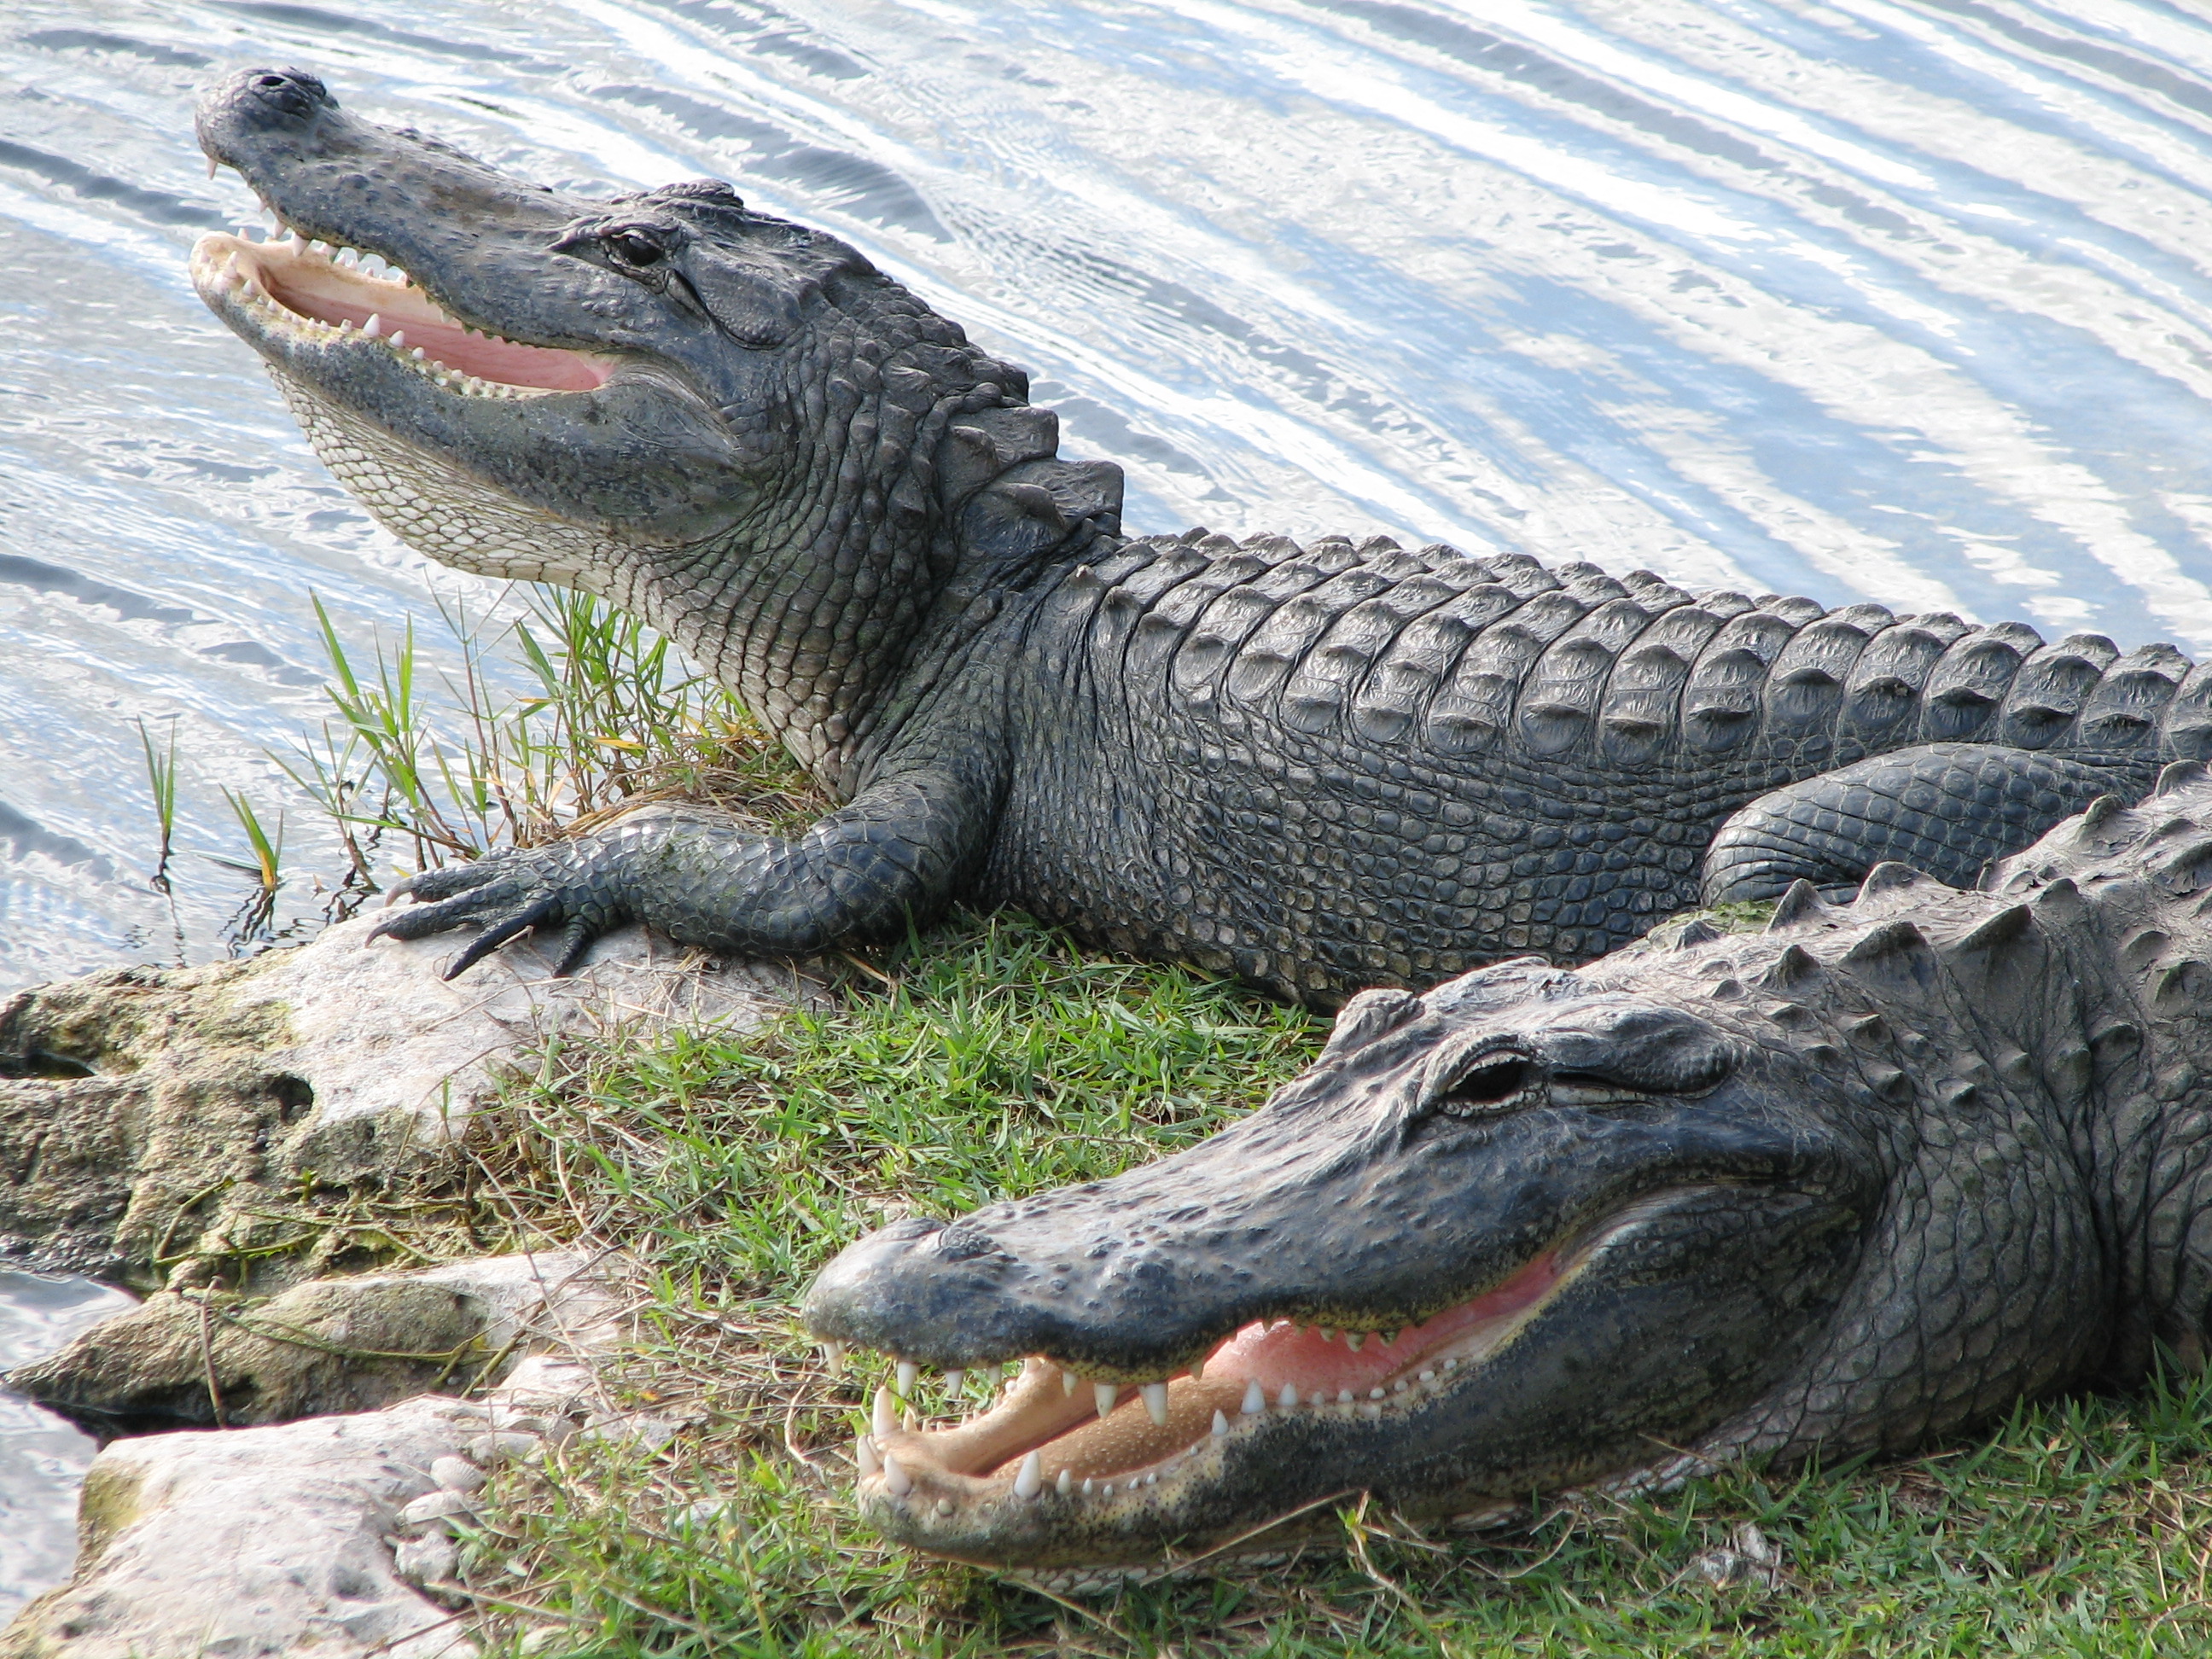 Alligator Wallpaper Pictures Pics Photos Image Desktop